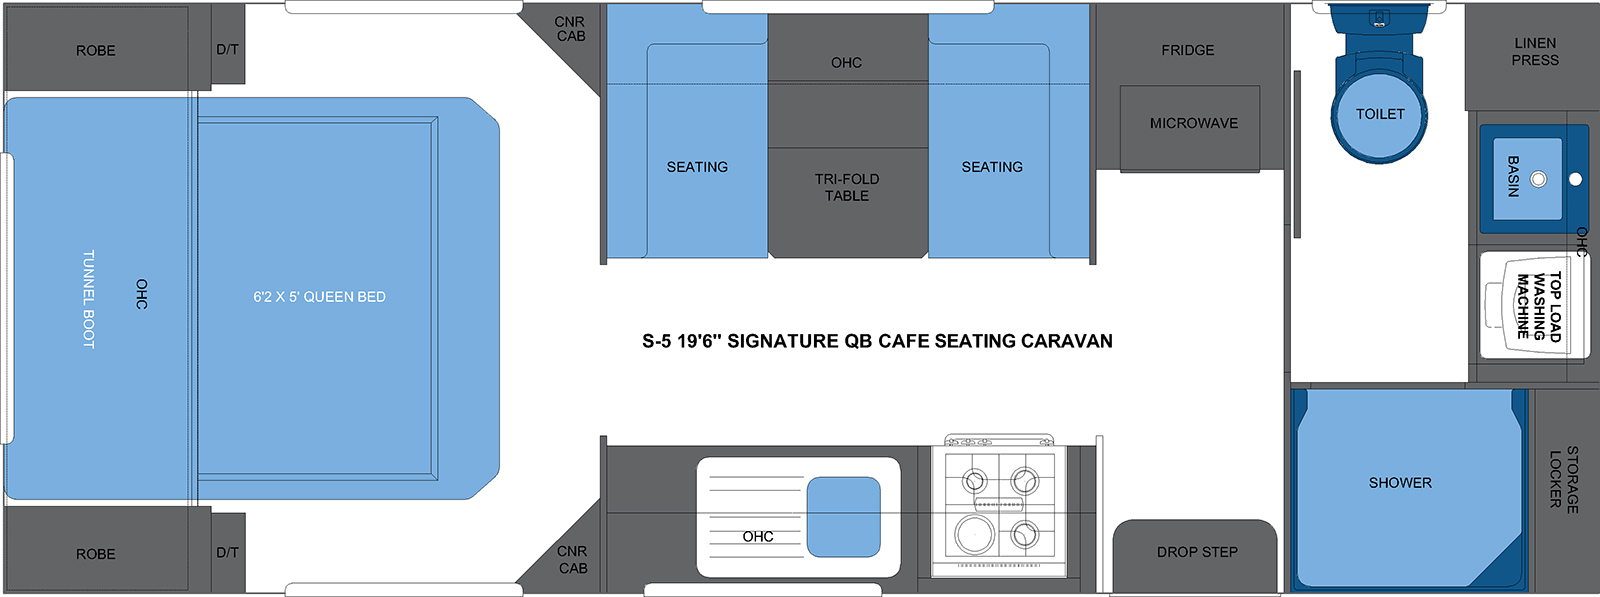 S-5 19'6 SIGNATURE QB CAFE SEATING CARAVAN